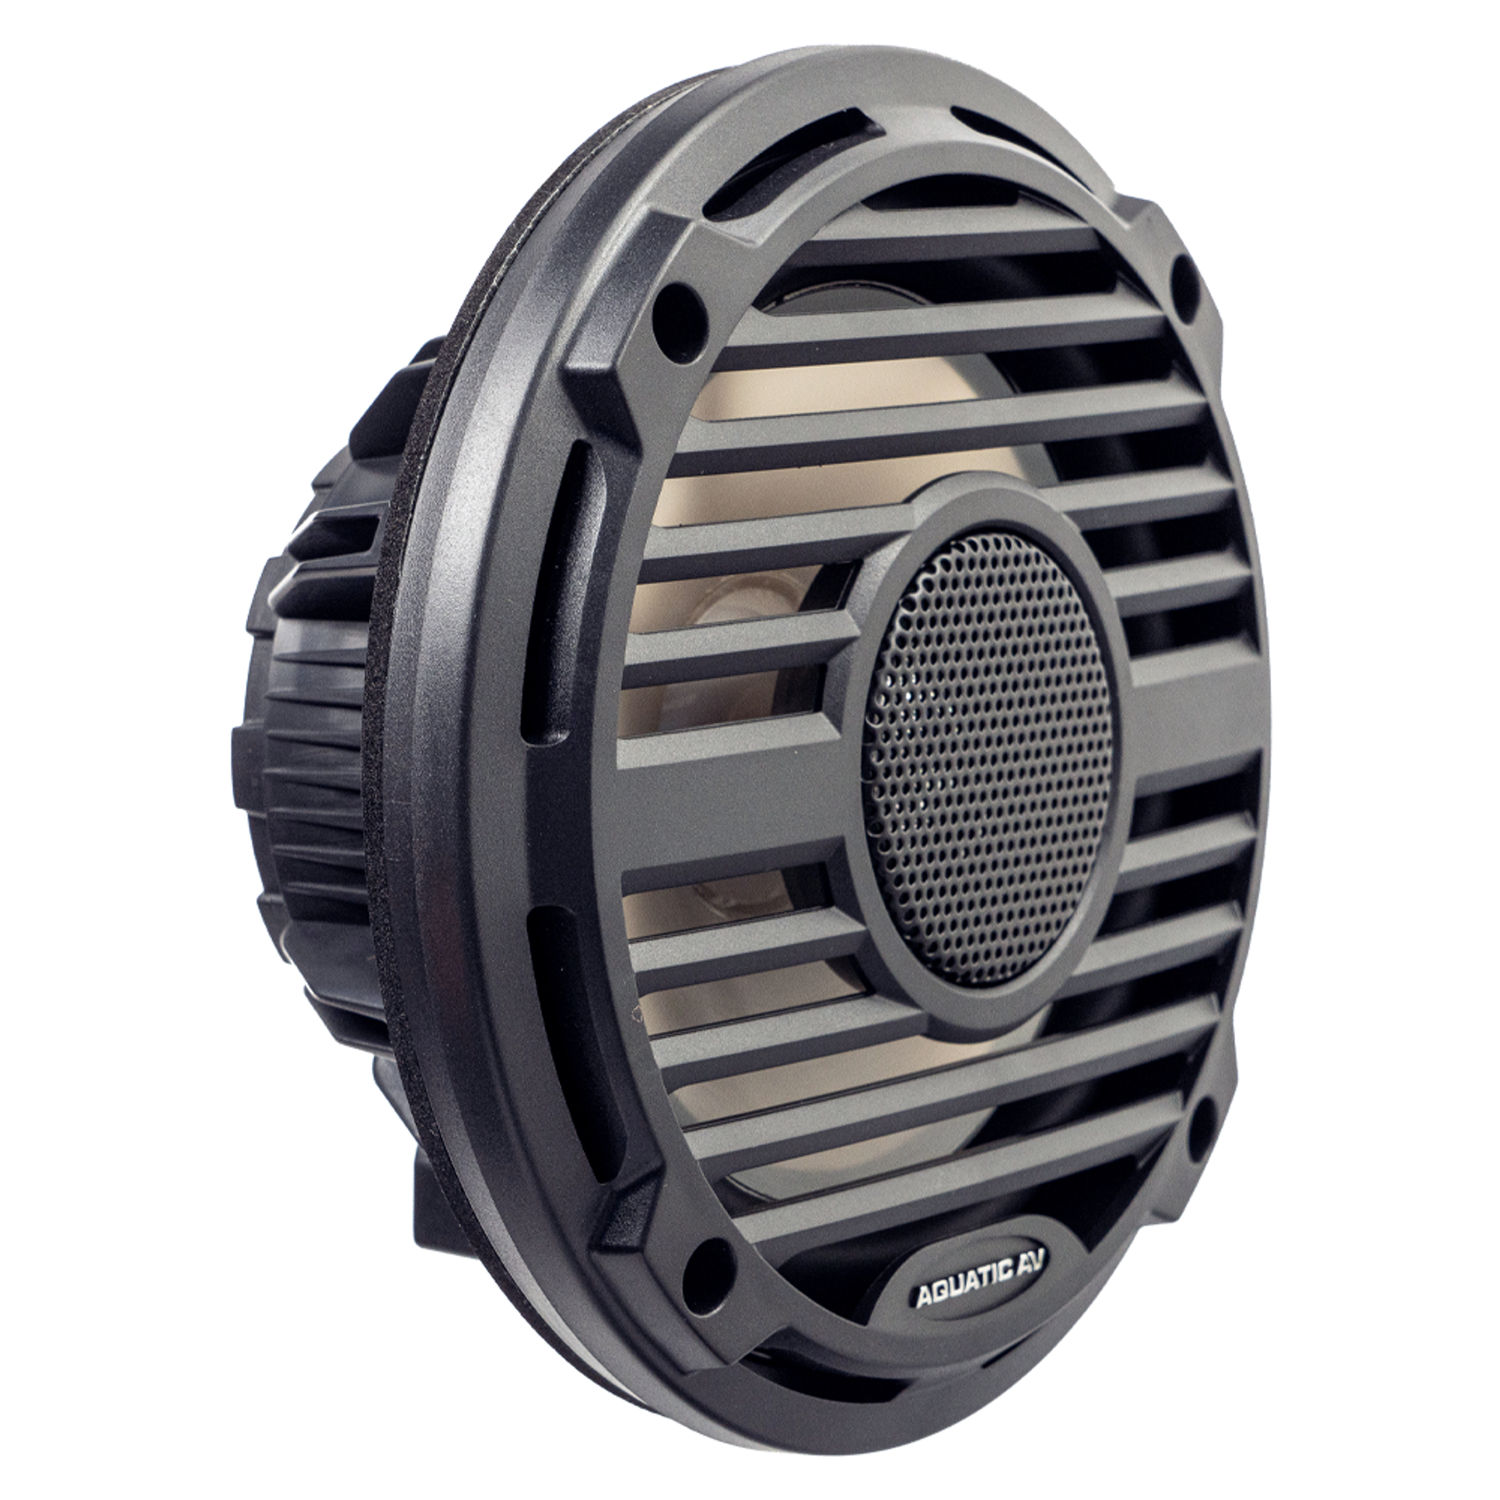 Aquatic AV 6.5" Pro Classic Speaker Black